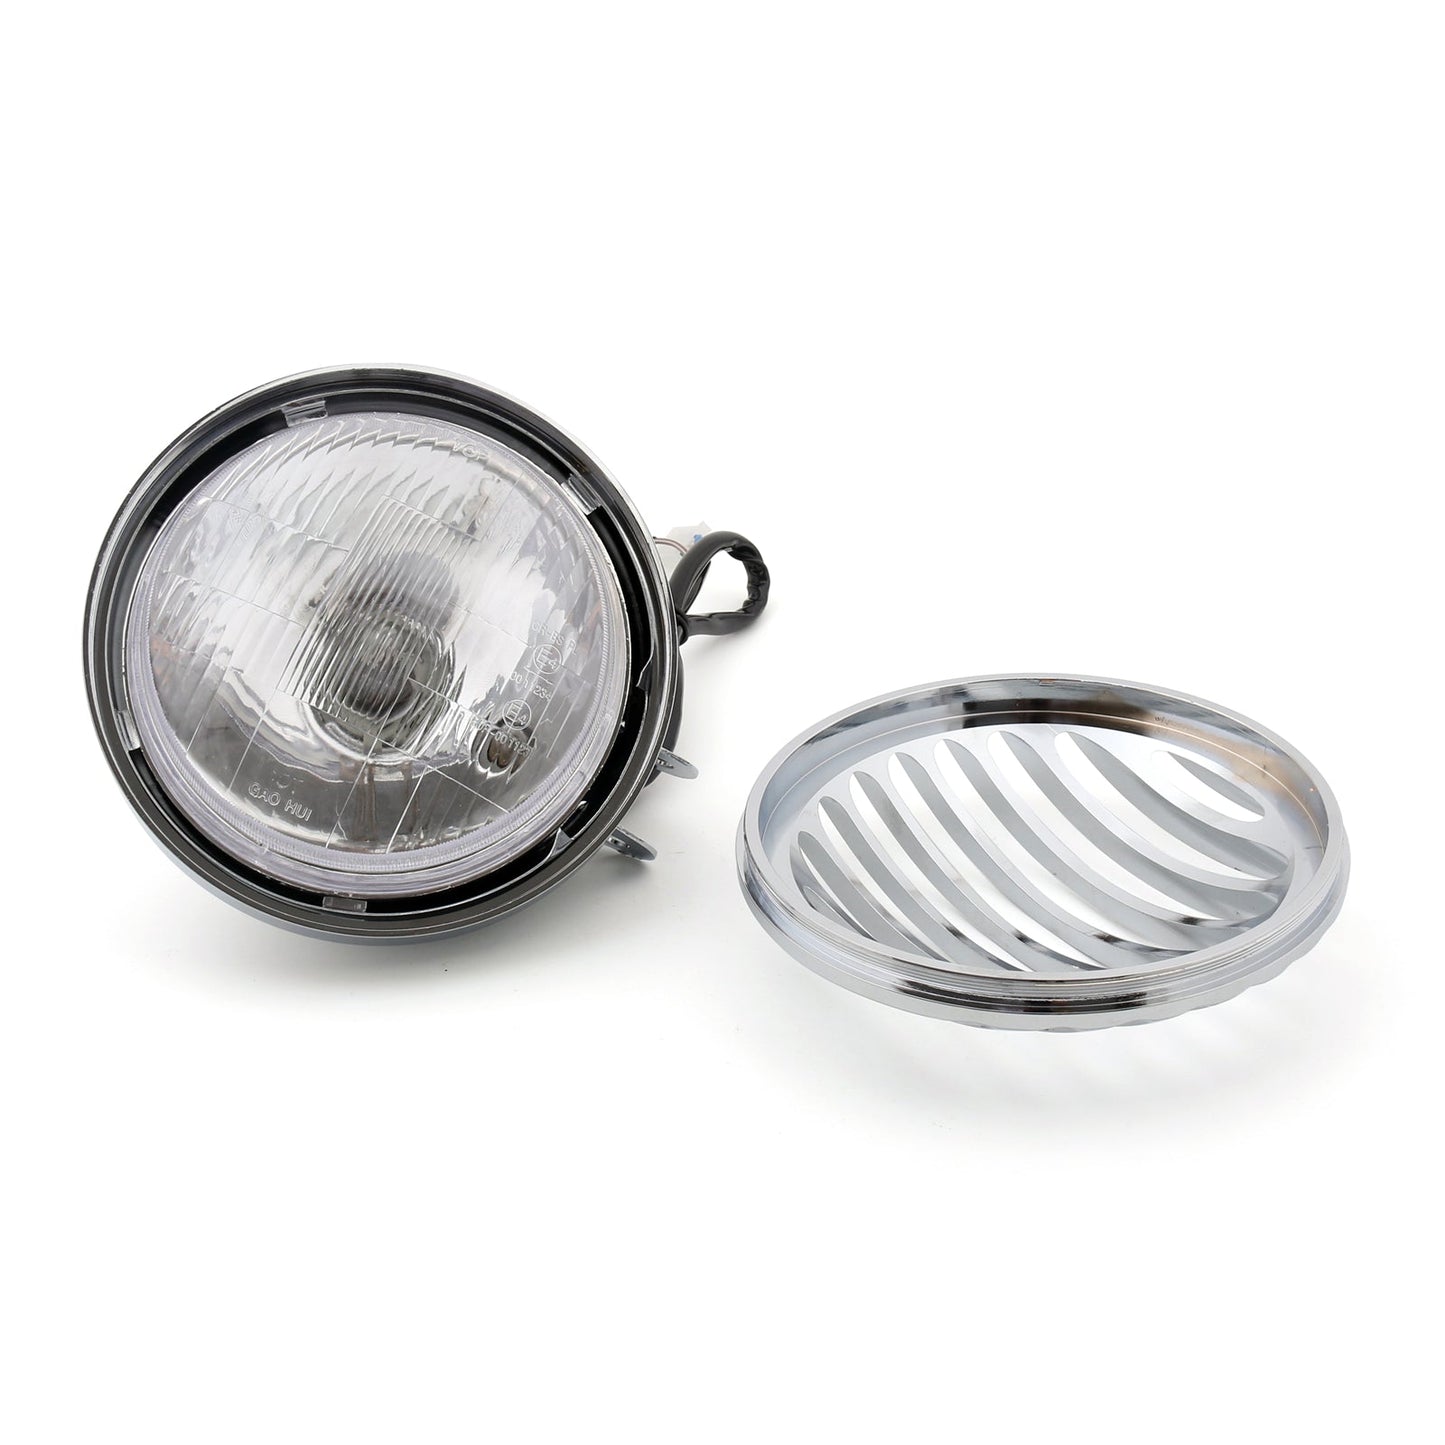 5 3/4" Headlight Headlamp w/ Grill Guard Chrome for Sportster XL883 XL1200 04-14